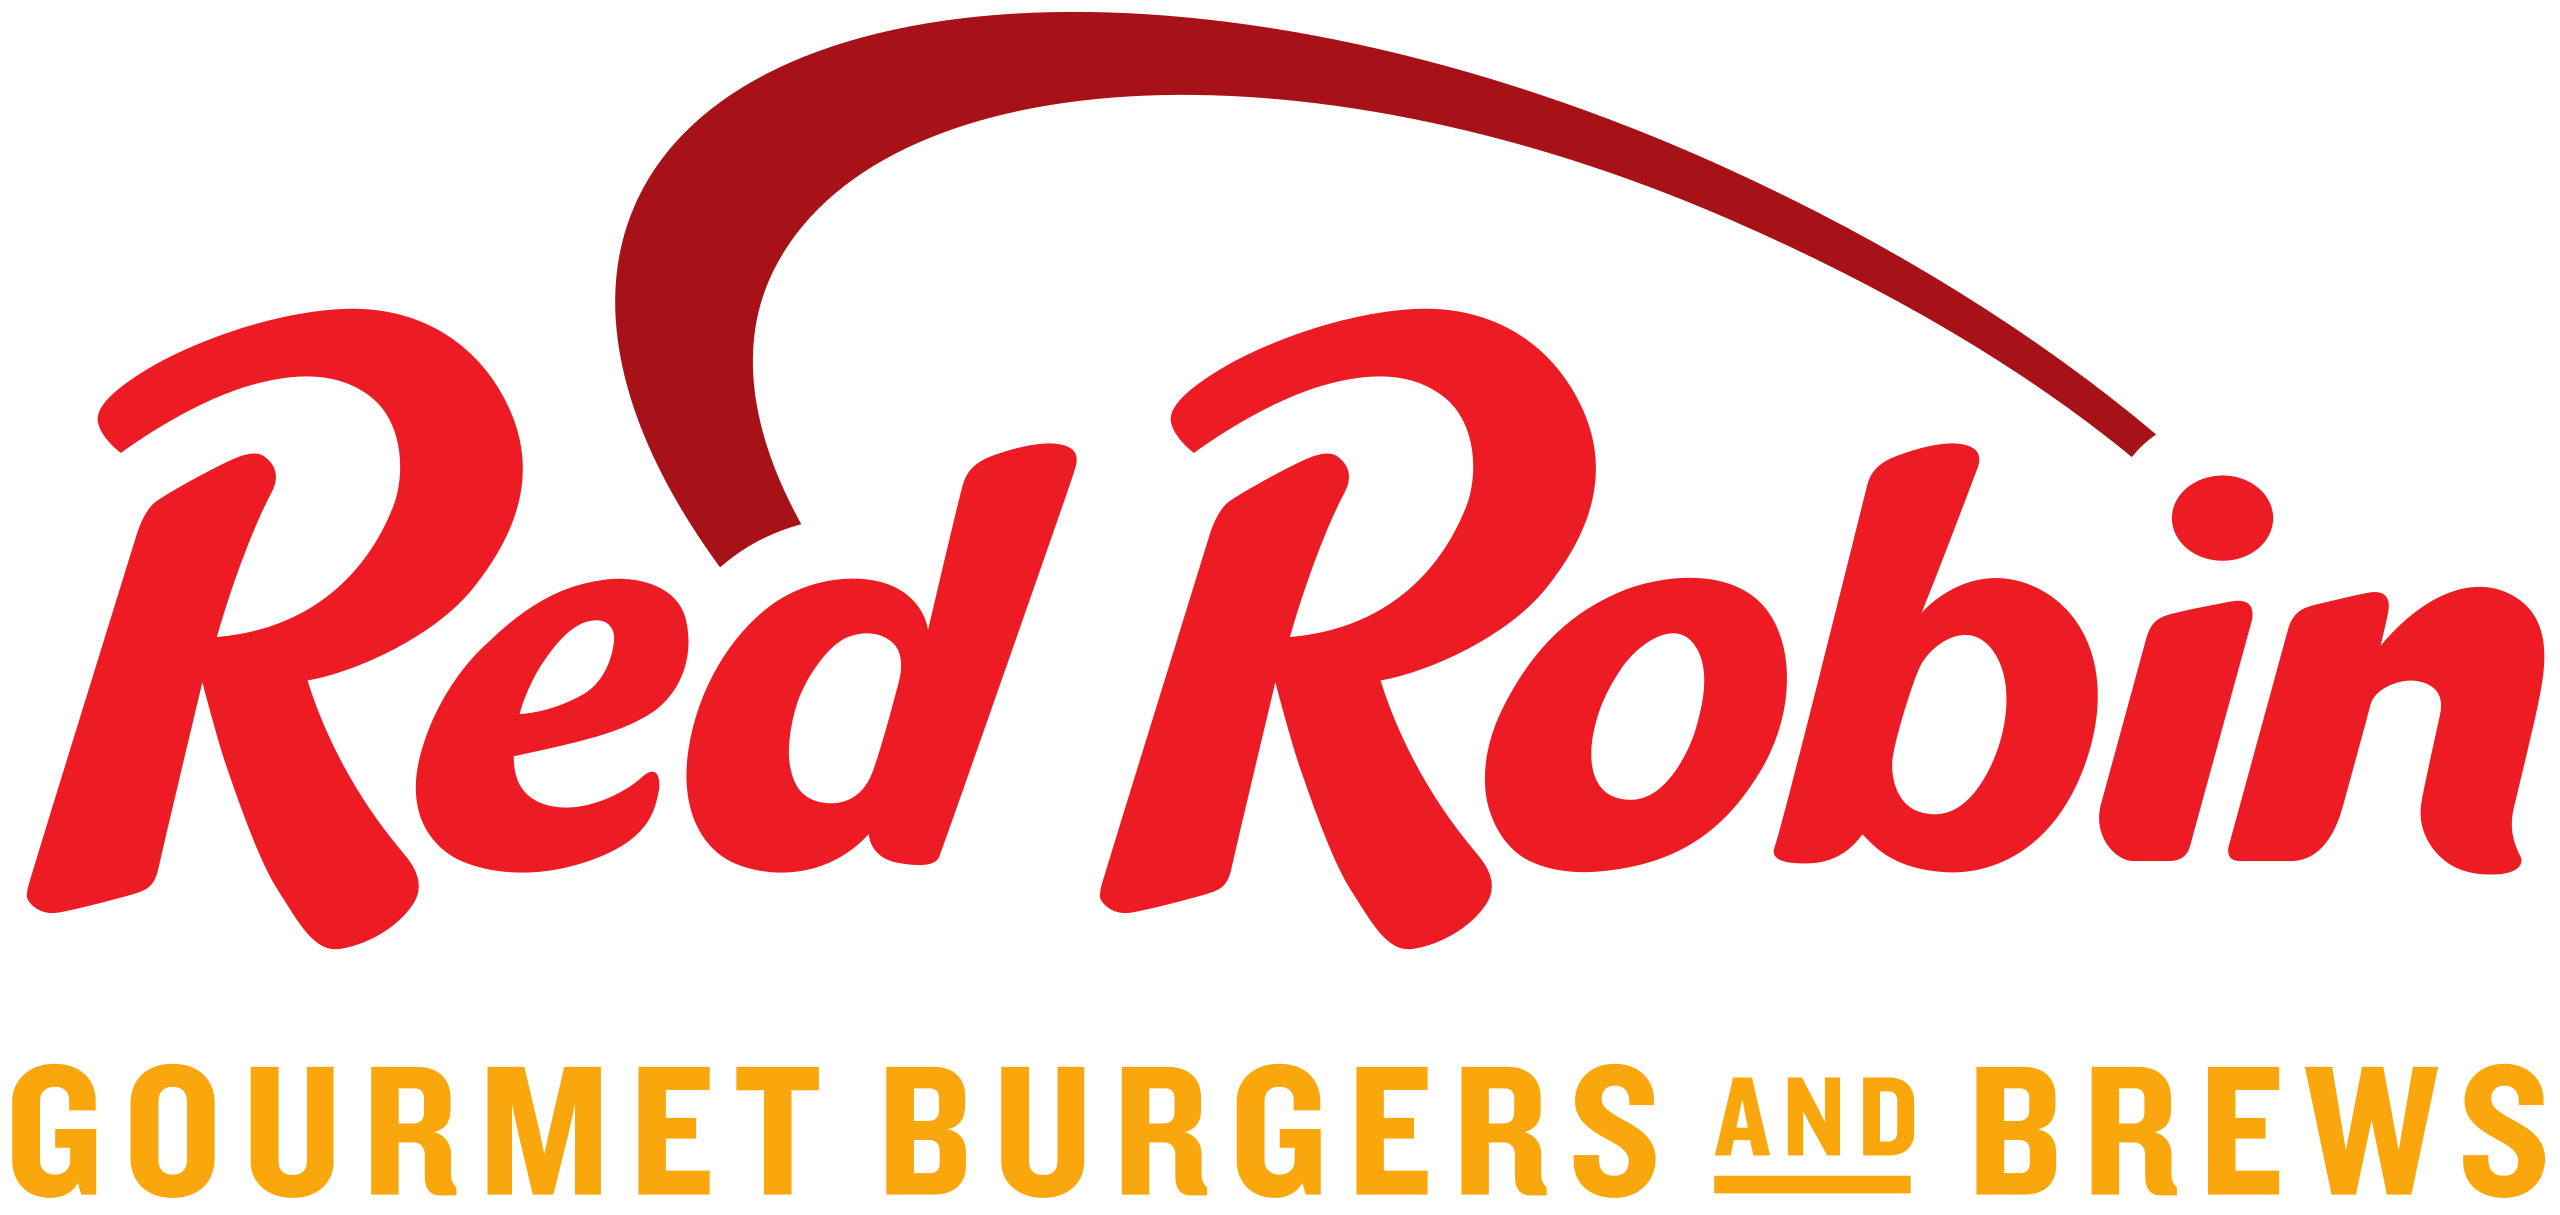 File:Red Robin logo.svg - Wikimedia